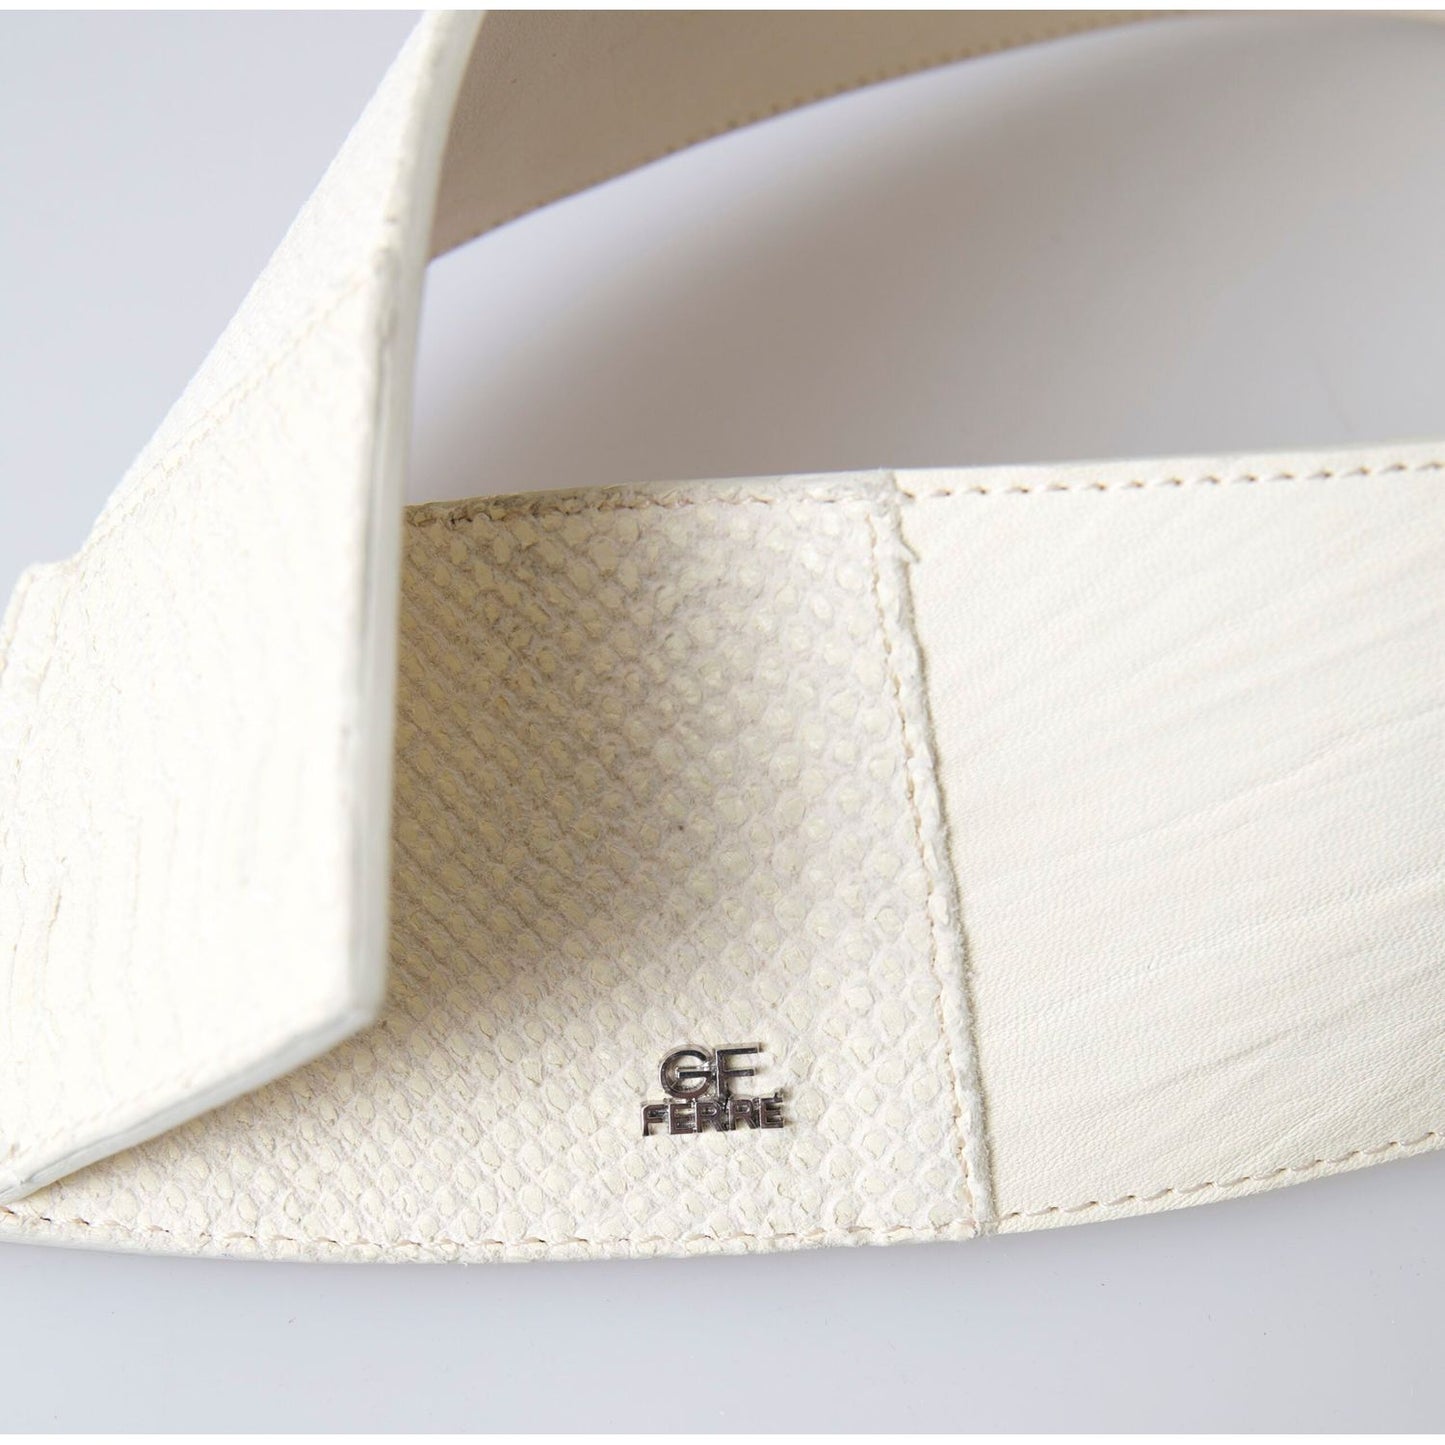 GF Ferre Chic Off White Snap Button Fashion Belt off-white-waxed-cotton-wide-fashion-waistband-belt